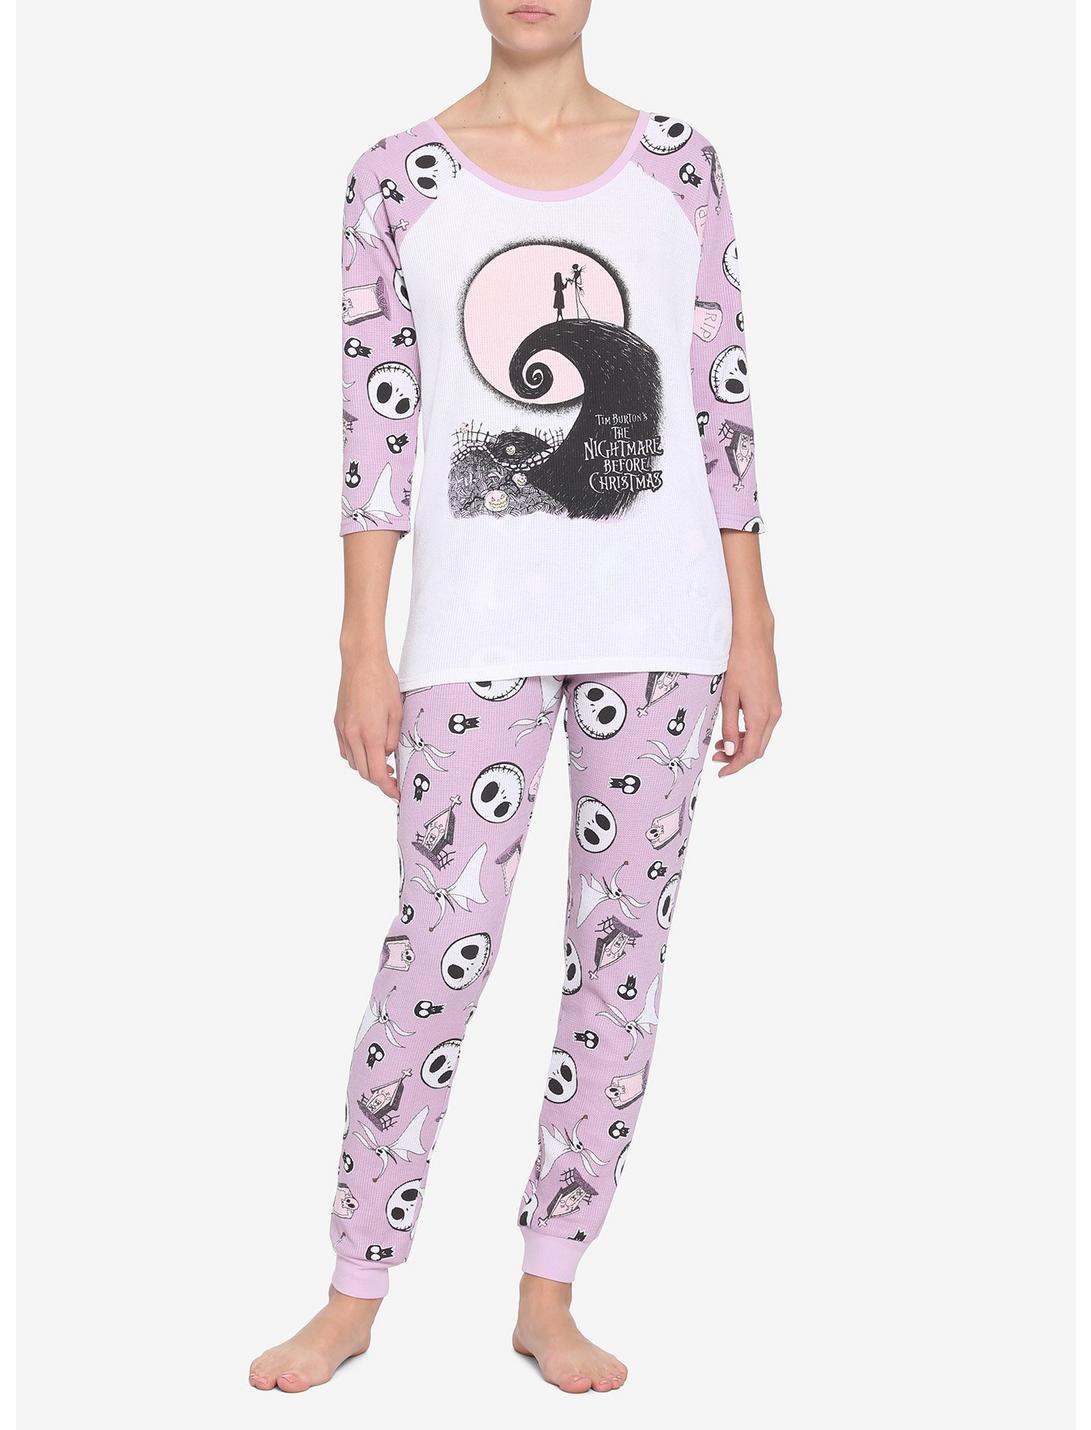 The Nightmare Before Christmas Lavender Girls Thermal Pajama Set, MULTI, hi-res